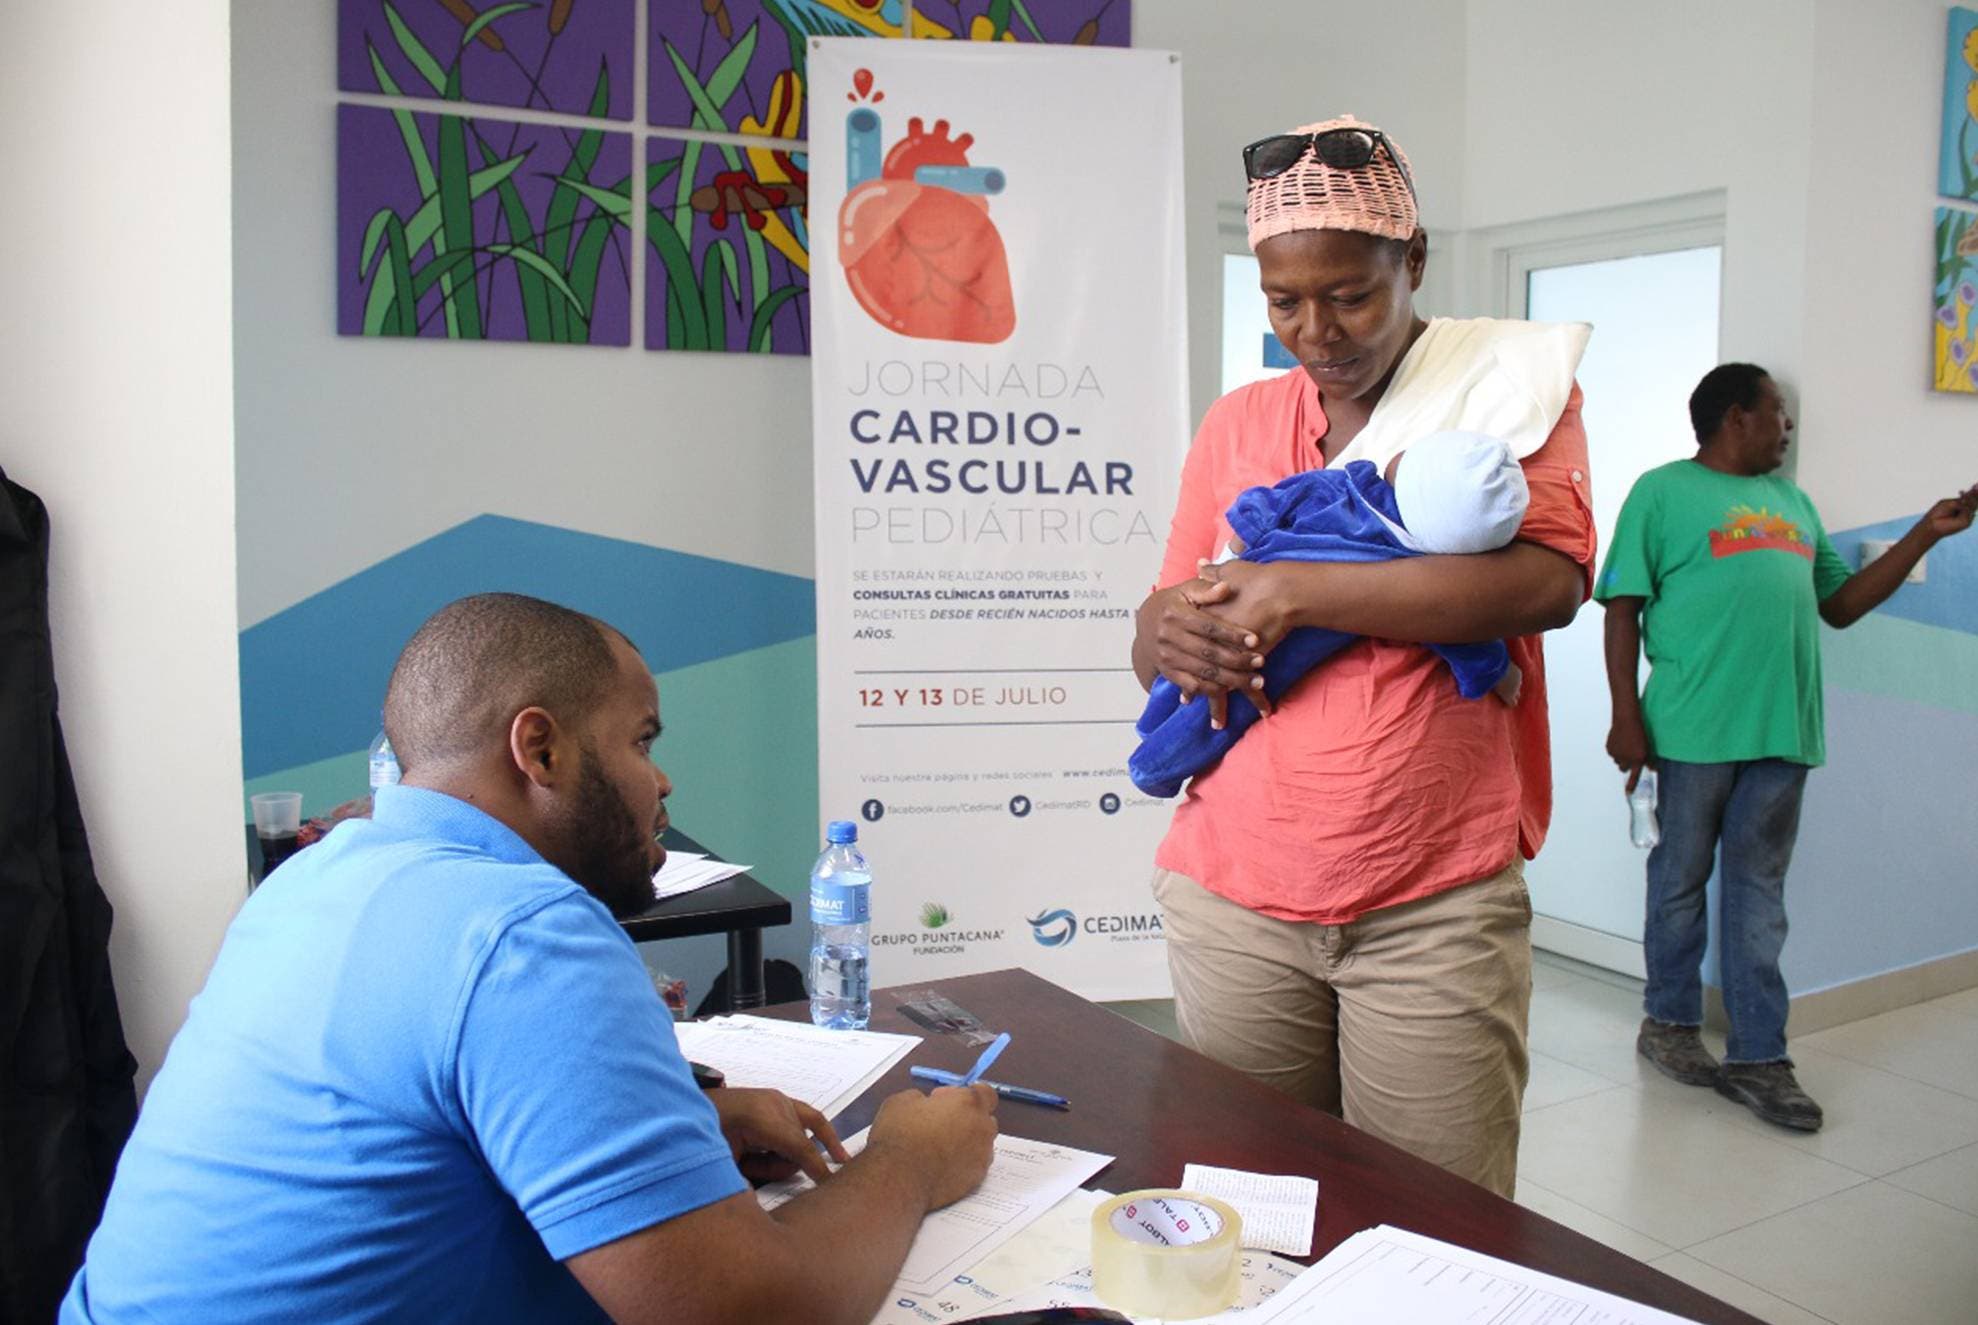 CEDIMAT y Fundación Grupo Puntacana realizan jornada cardiovascular pediátrica en Verón